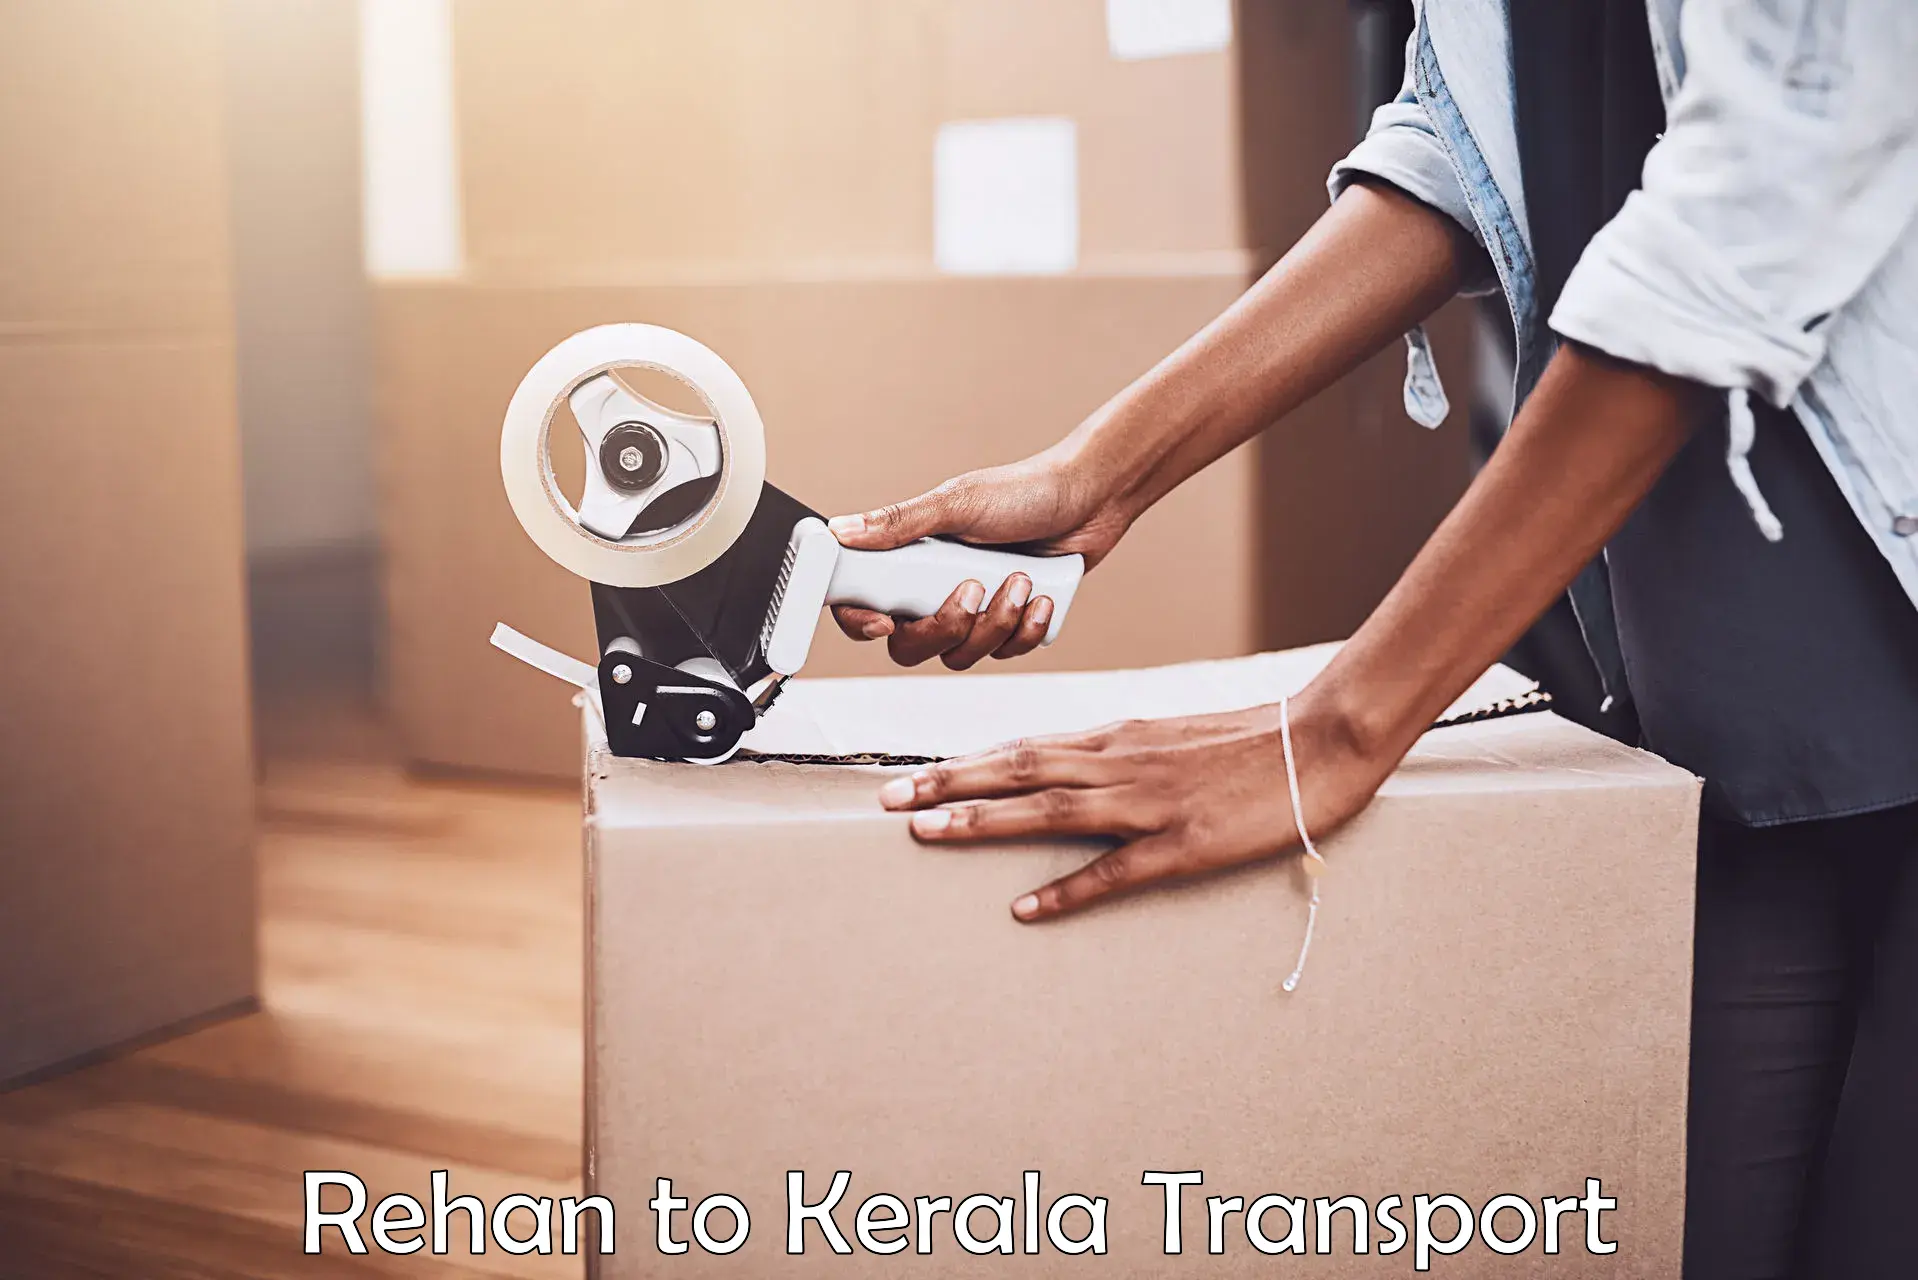 Nearby transport service Rehan to Kerala